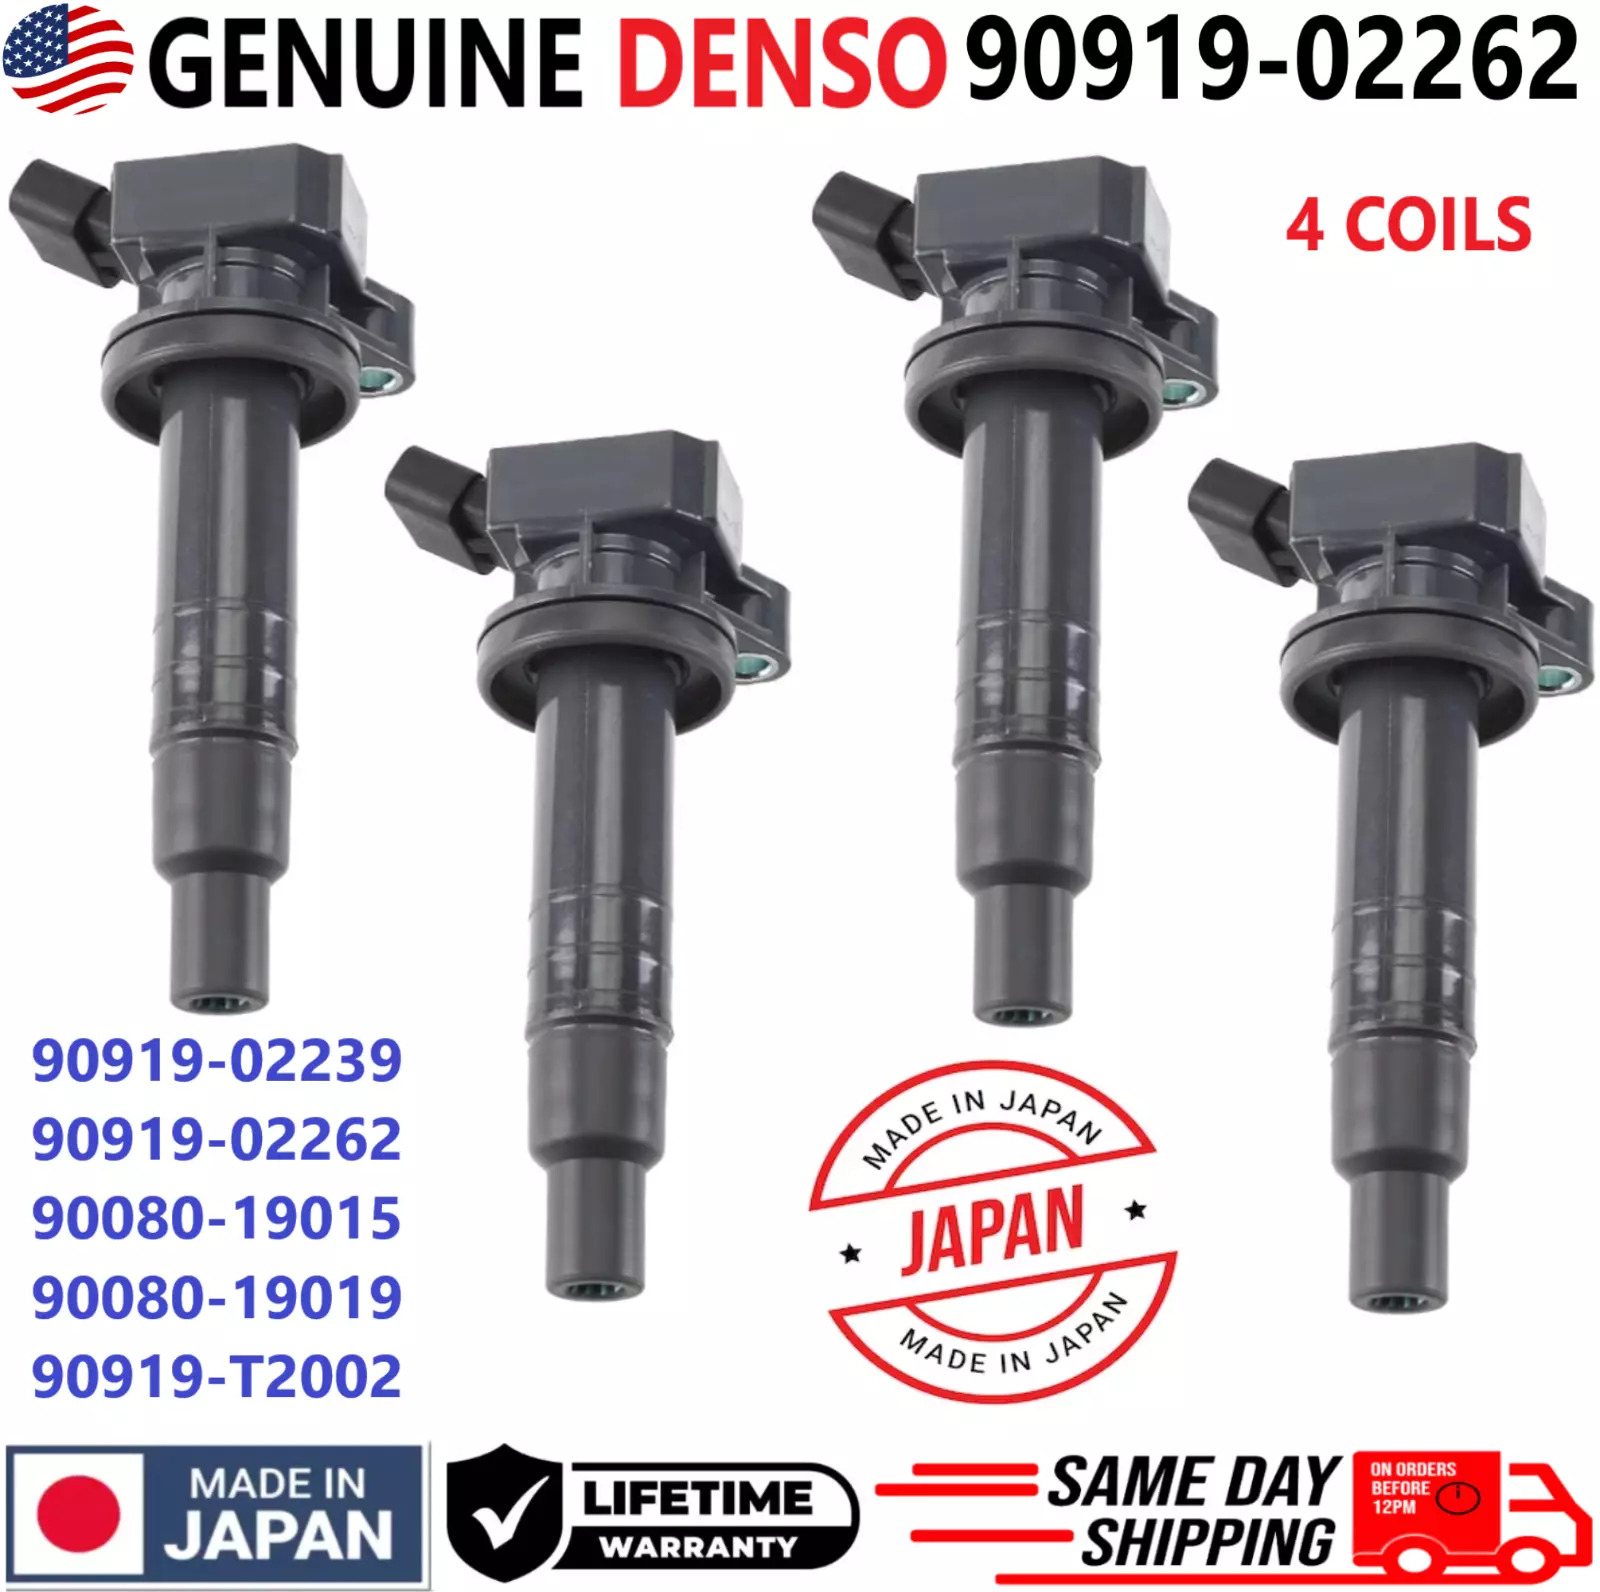 OEM DENSO x4 Ignition Coils For 2000-2008 Toyota & Chevrolet 1.8L I4 90919-02262